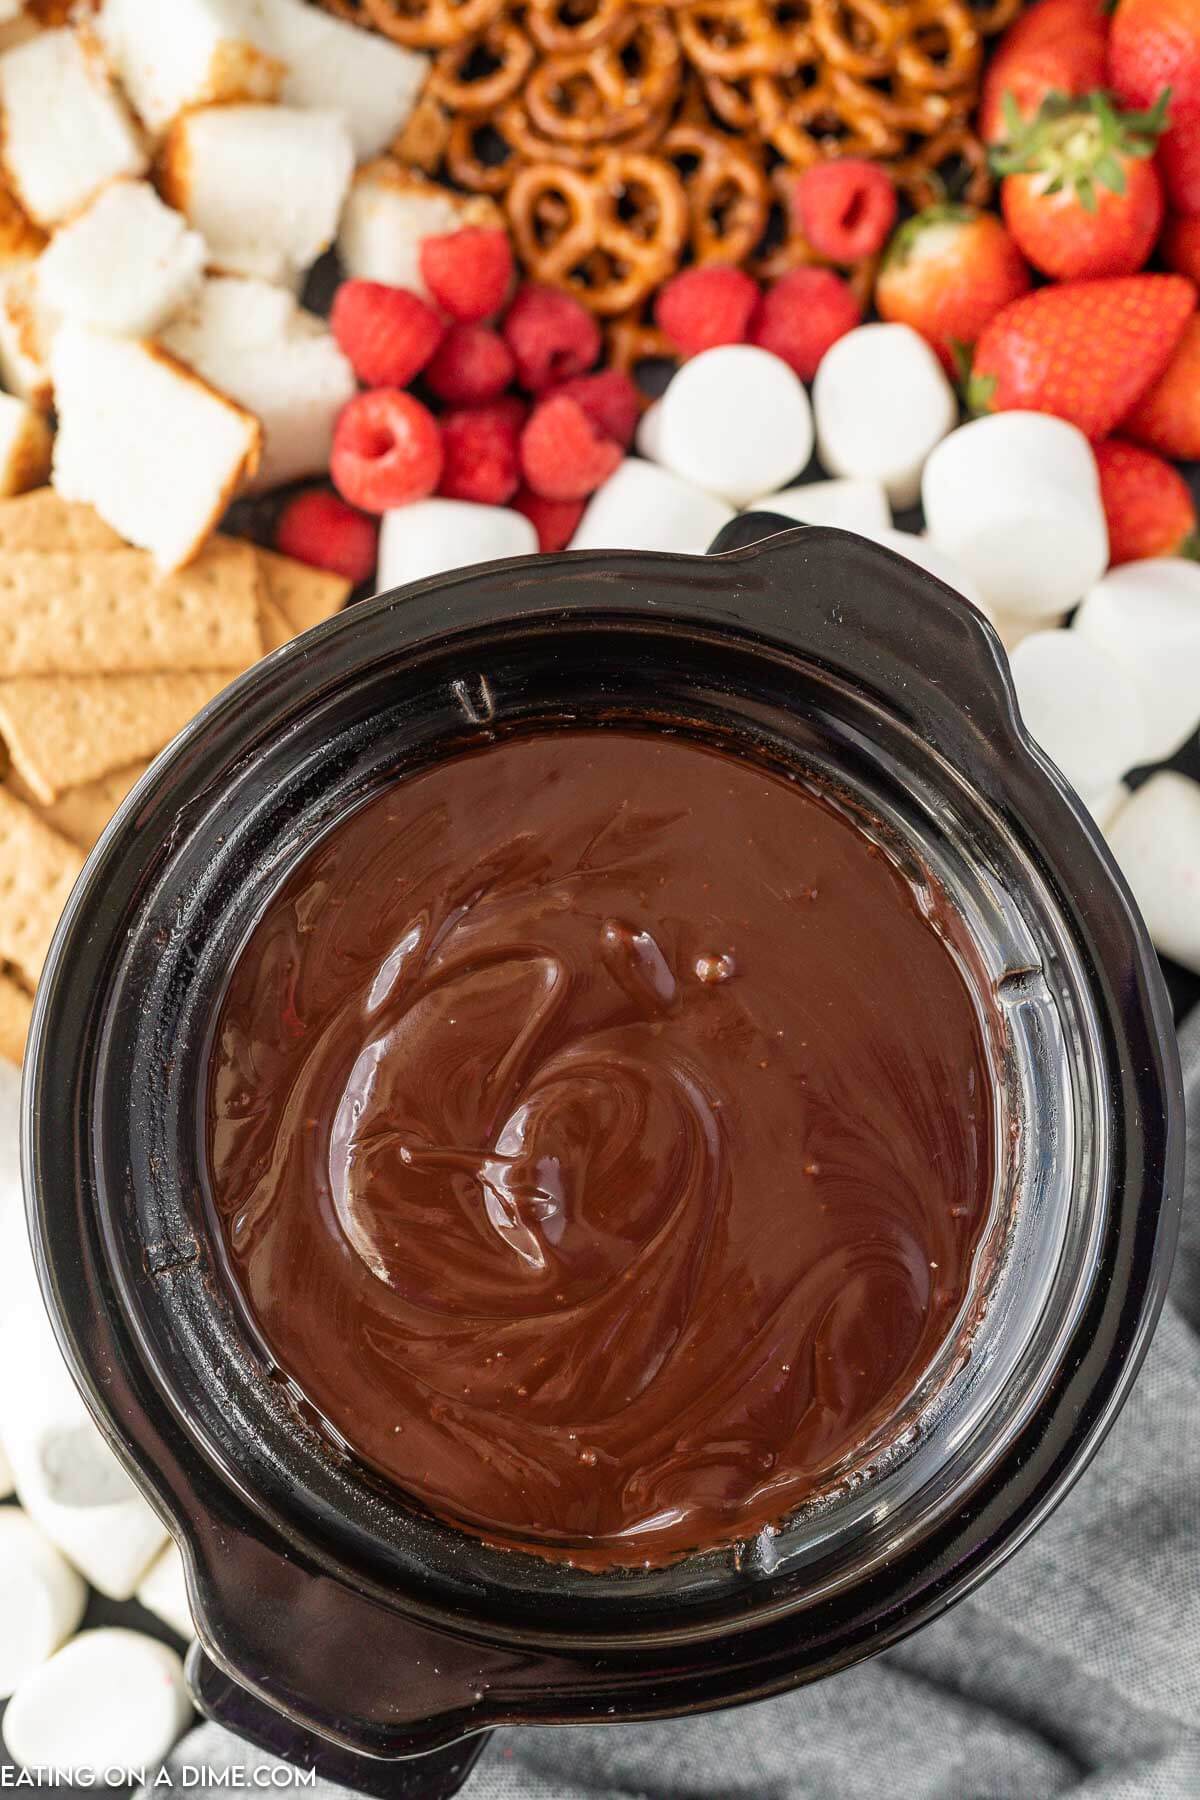 https://www.eatingonadime.com/wp-content/uploads/2023/03/eod-cp-chocolate-fondue-5.jpg